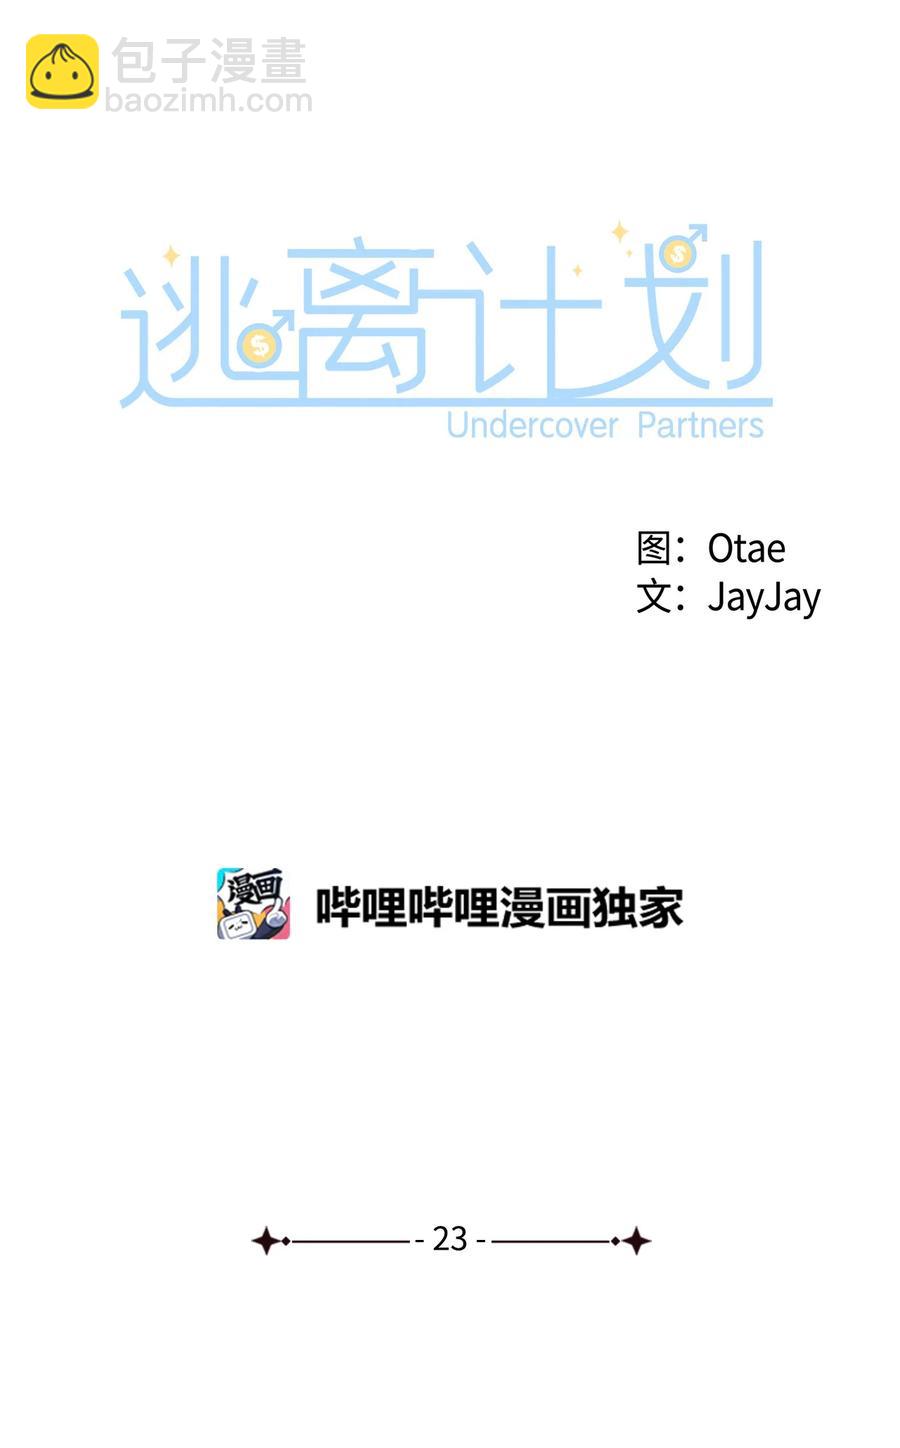 逃離計劃-Undercover Partners - 23 下廚(1/2) - 7